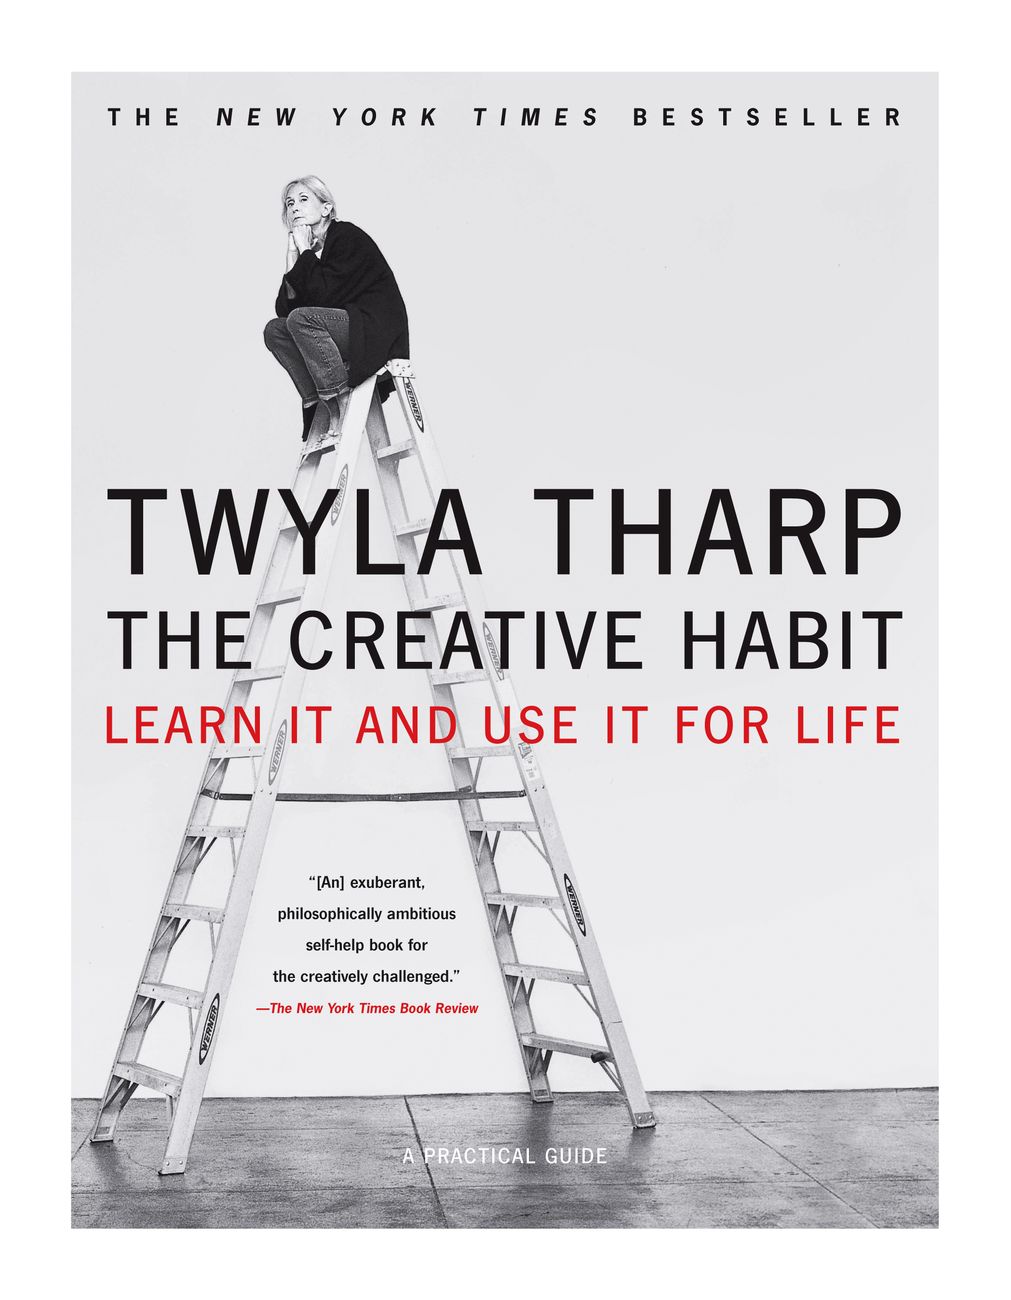 Twyla Tharp, The Creative Habit (Simon & Schuster, 2006)